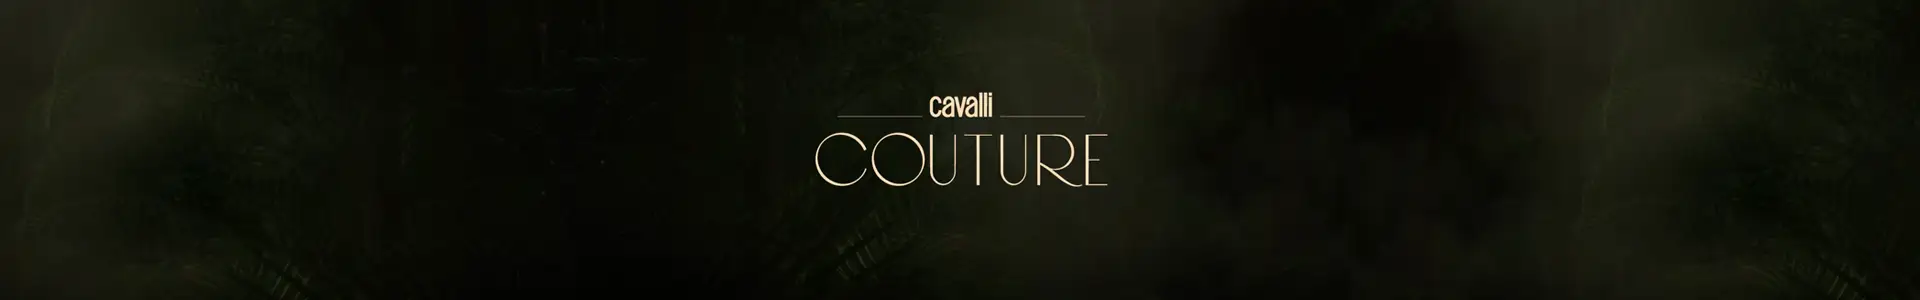 Damac Cavalli Couture Payment Plan